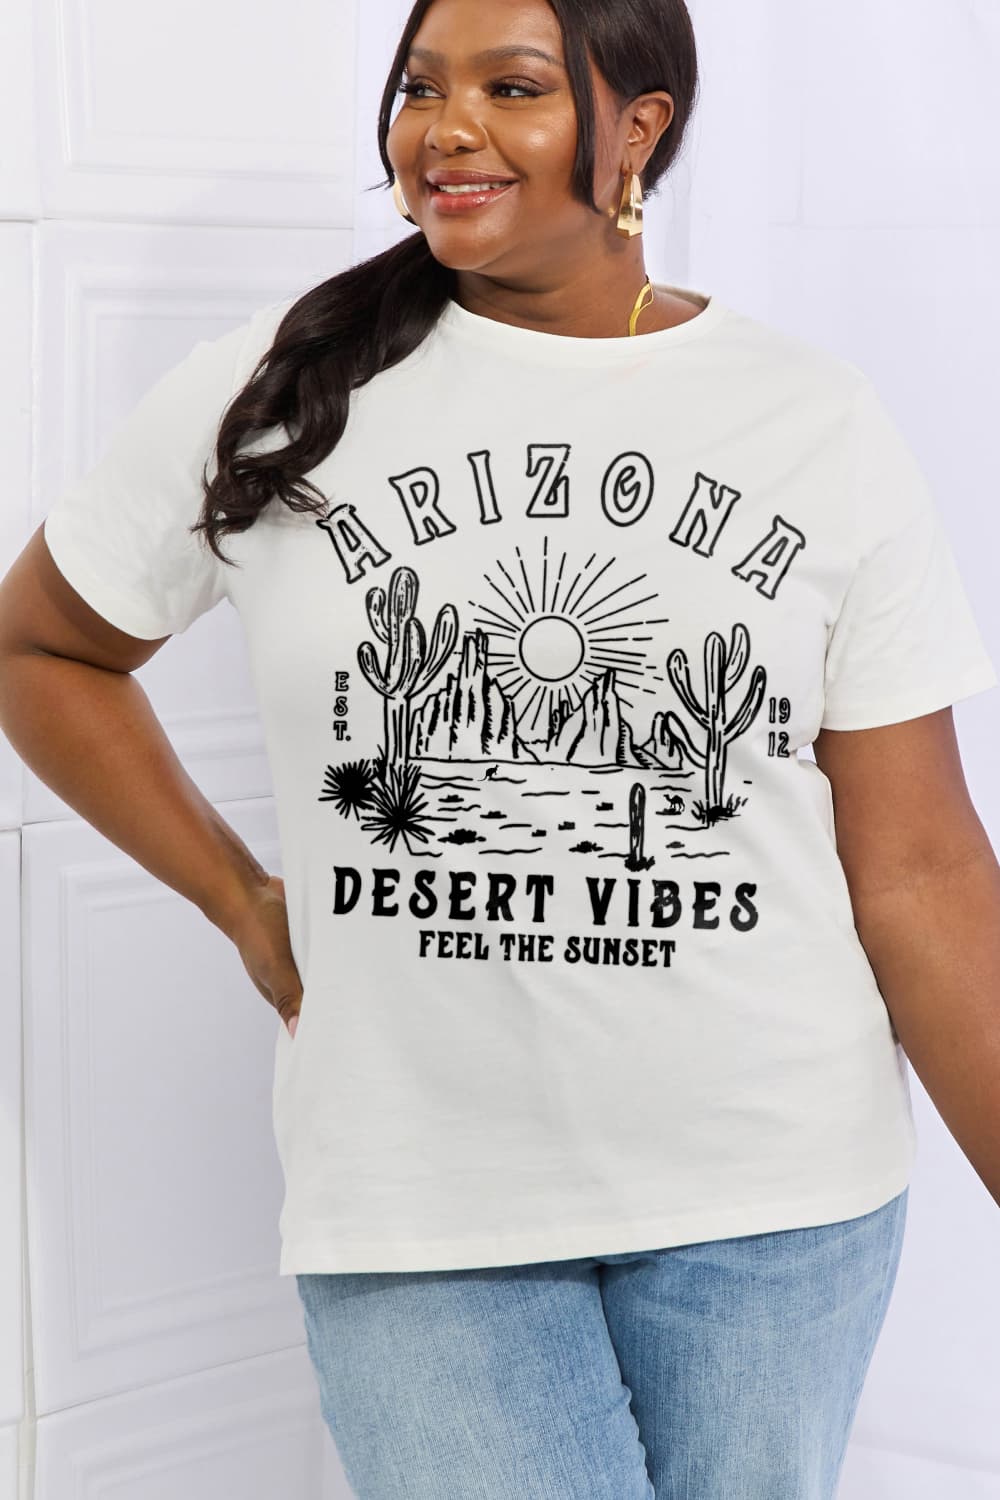 Simply Love Full Size ARIZONA DESERT VIBES FEEL THE SUNSET Graphic Cotton Tee